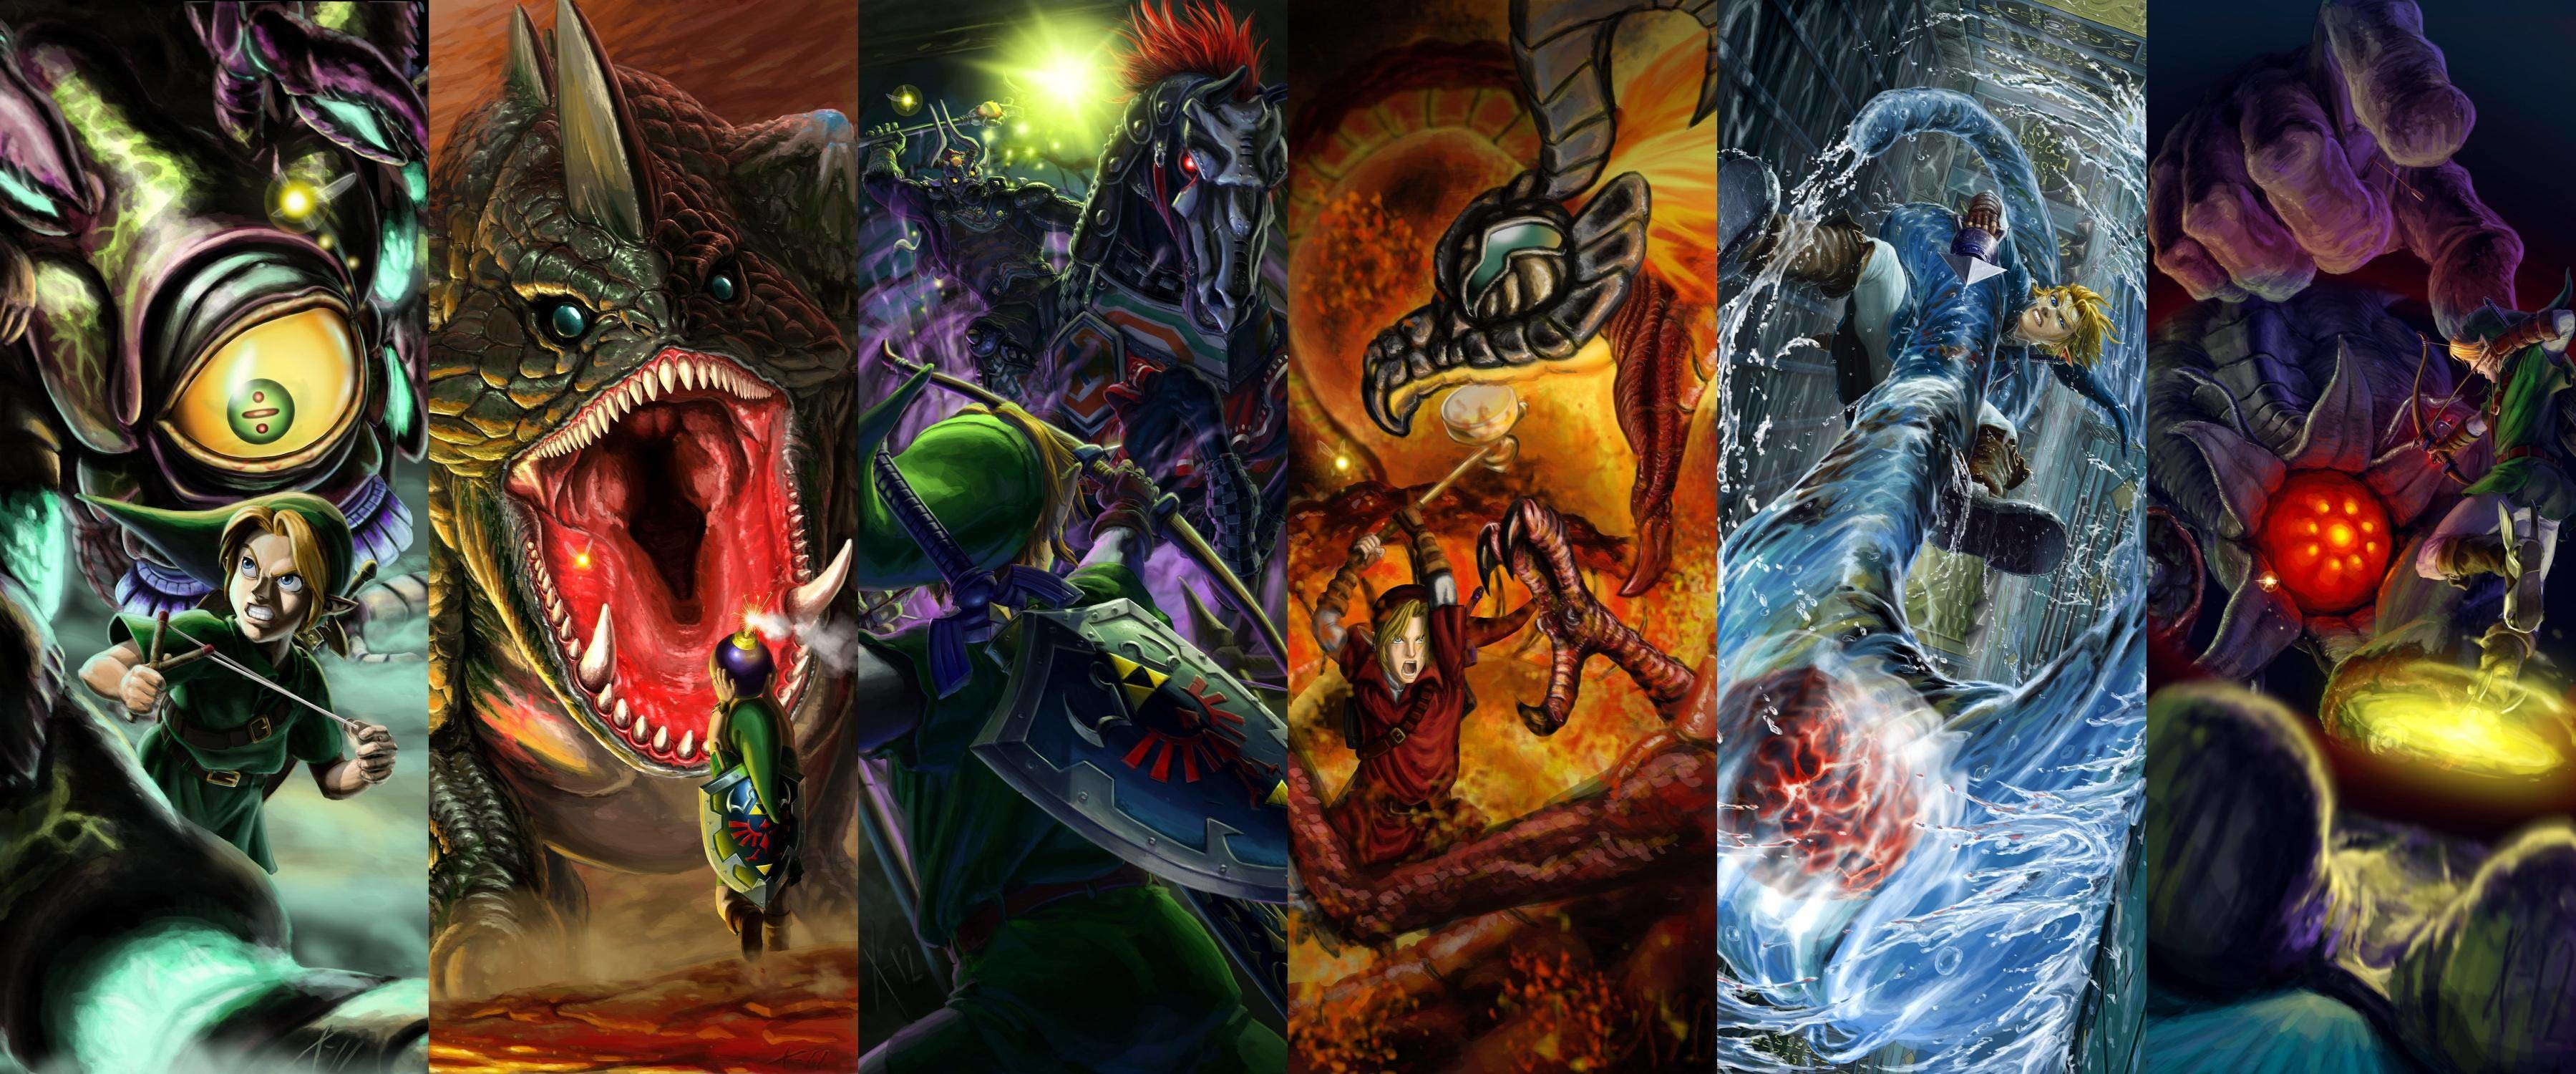 3599x1500 Ocarina of Time boss battles (Gohma, Dodongo, Phantom Ganon, Volvagia,  Morpha, & Bongo Bongo) wallpaper ...